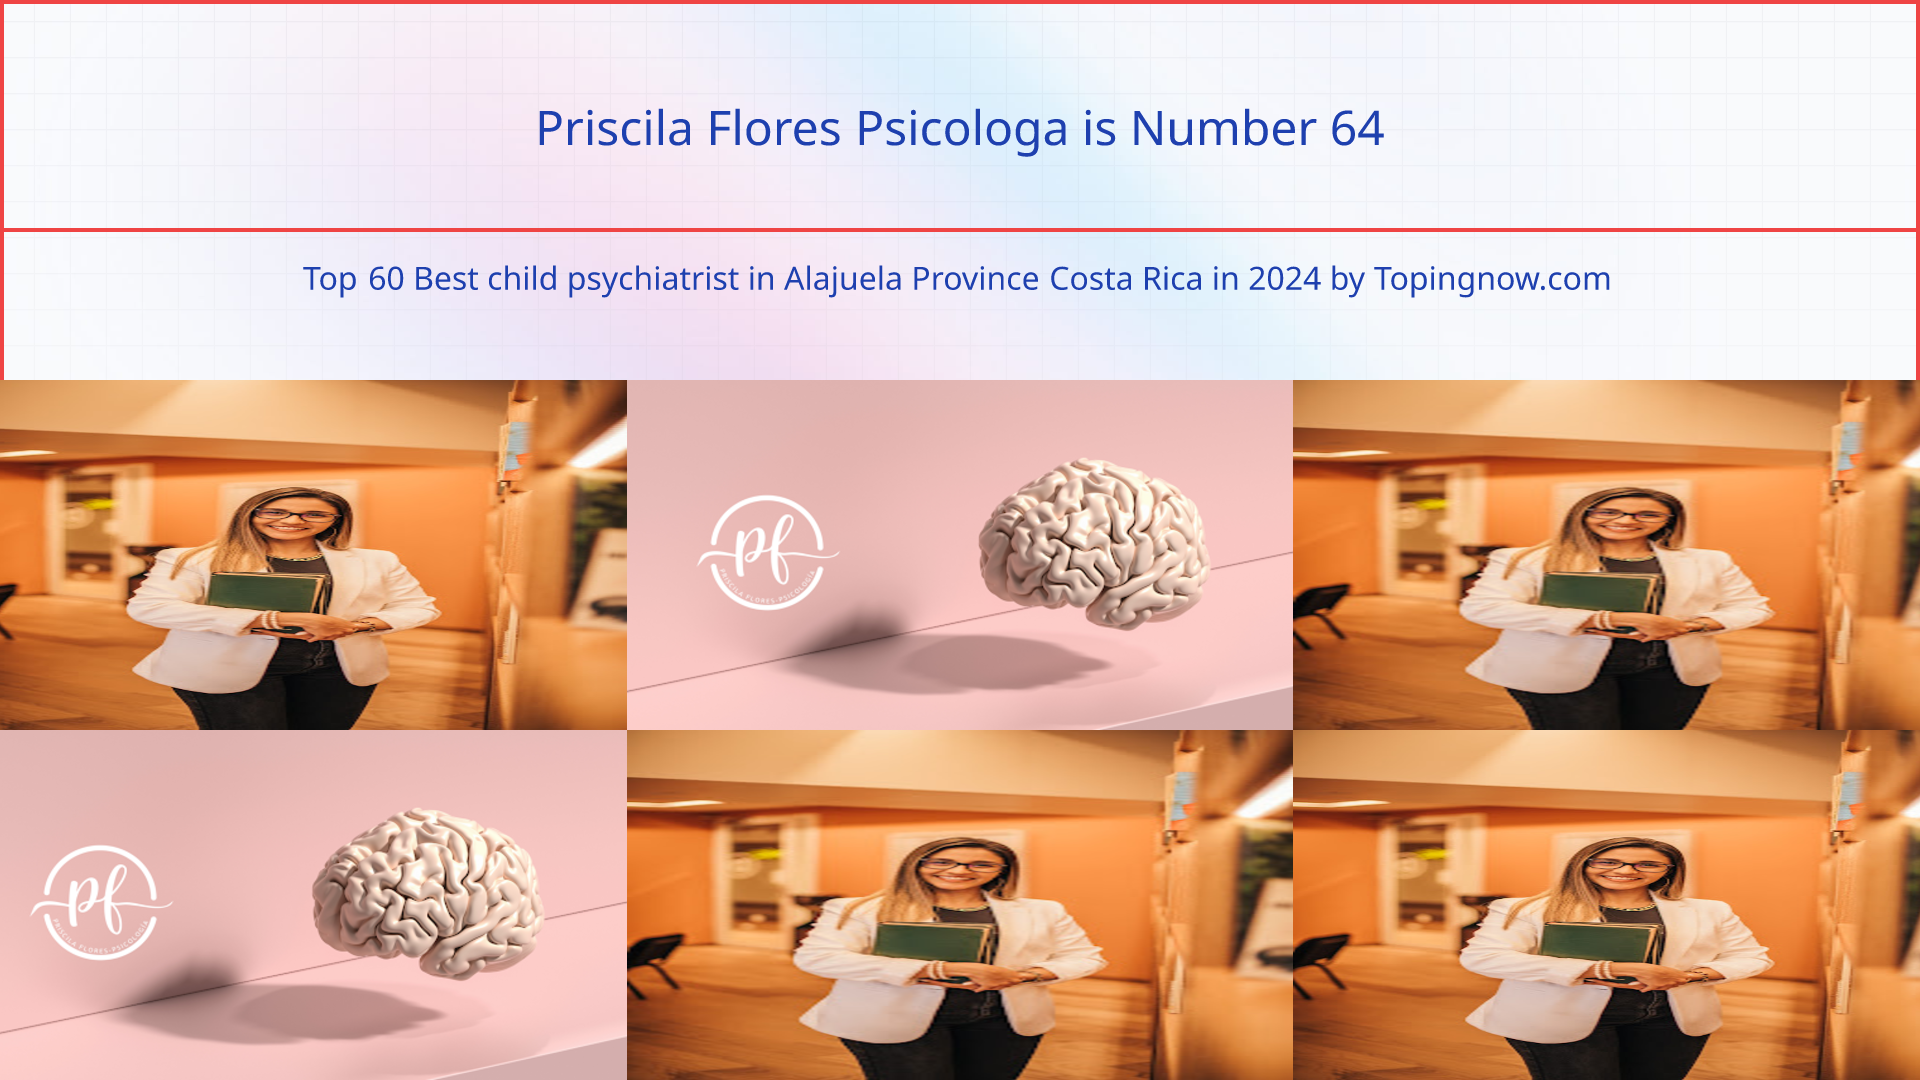 Priscila Flores Psicologa: Top 60 Best child psychiatrist in Alajuela Province Costa Rica in 2024